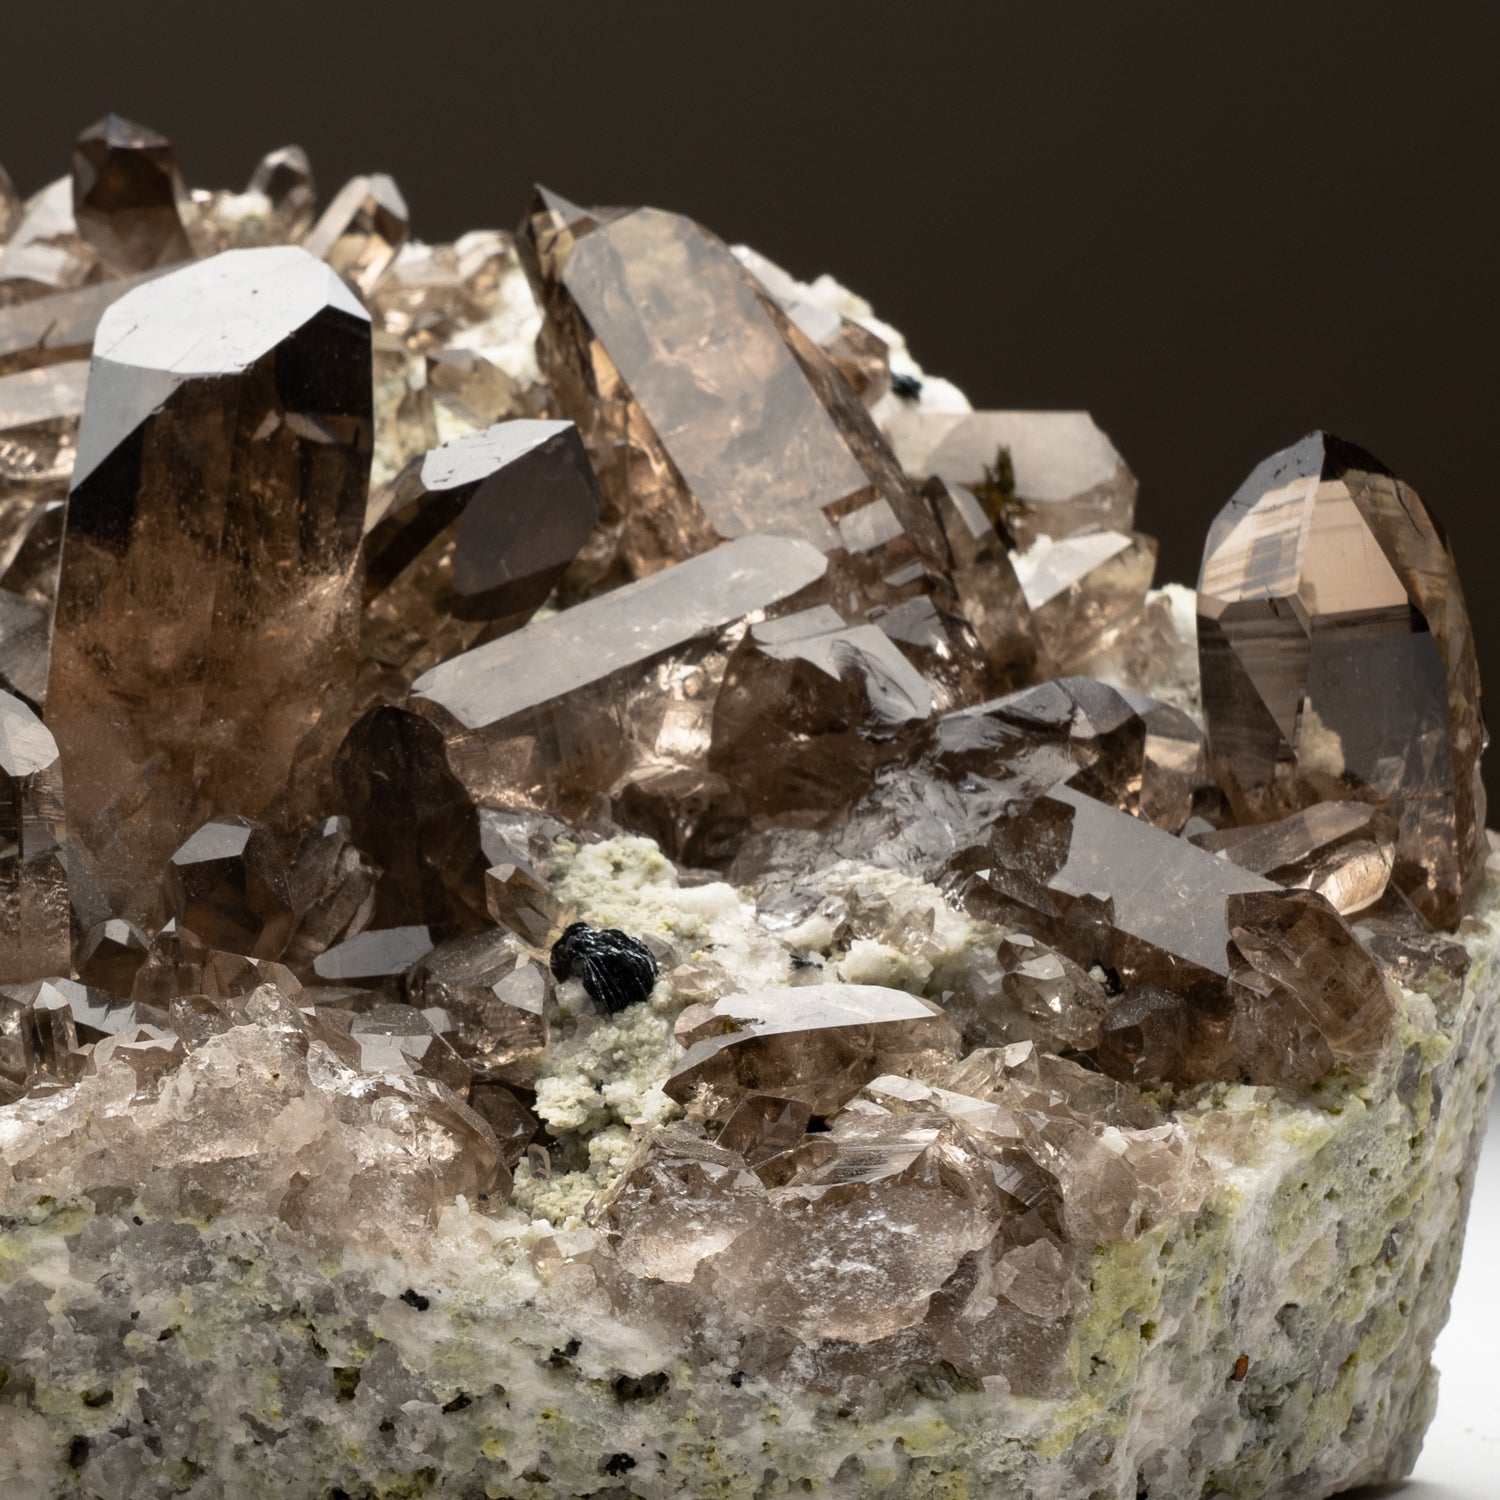 Smoky Quartz Crystals from St. Gotthard, Kanton Uri, Switzerland